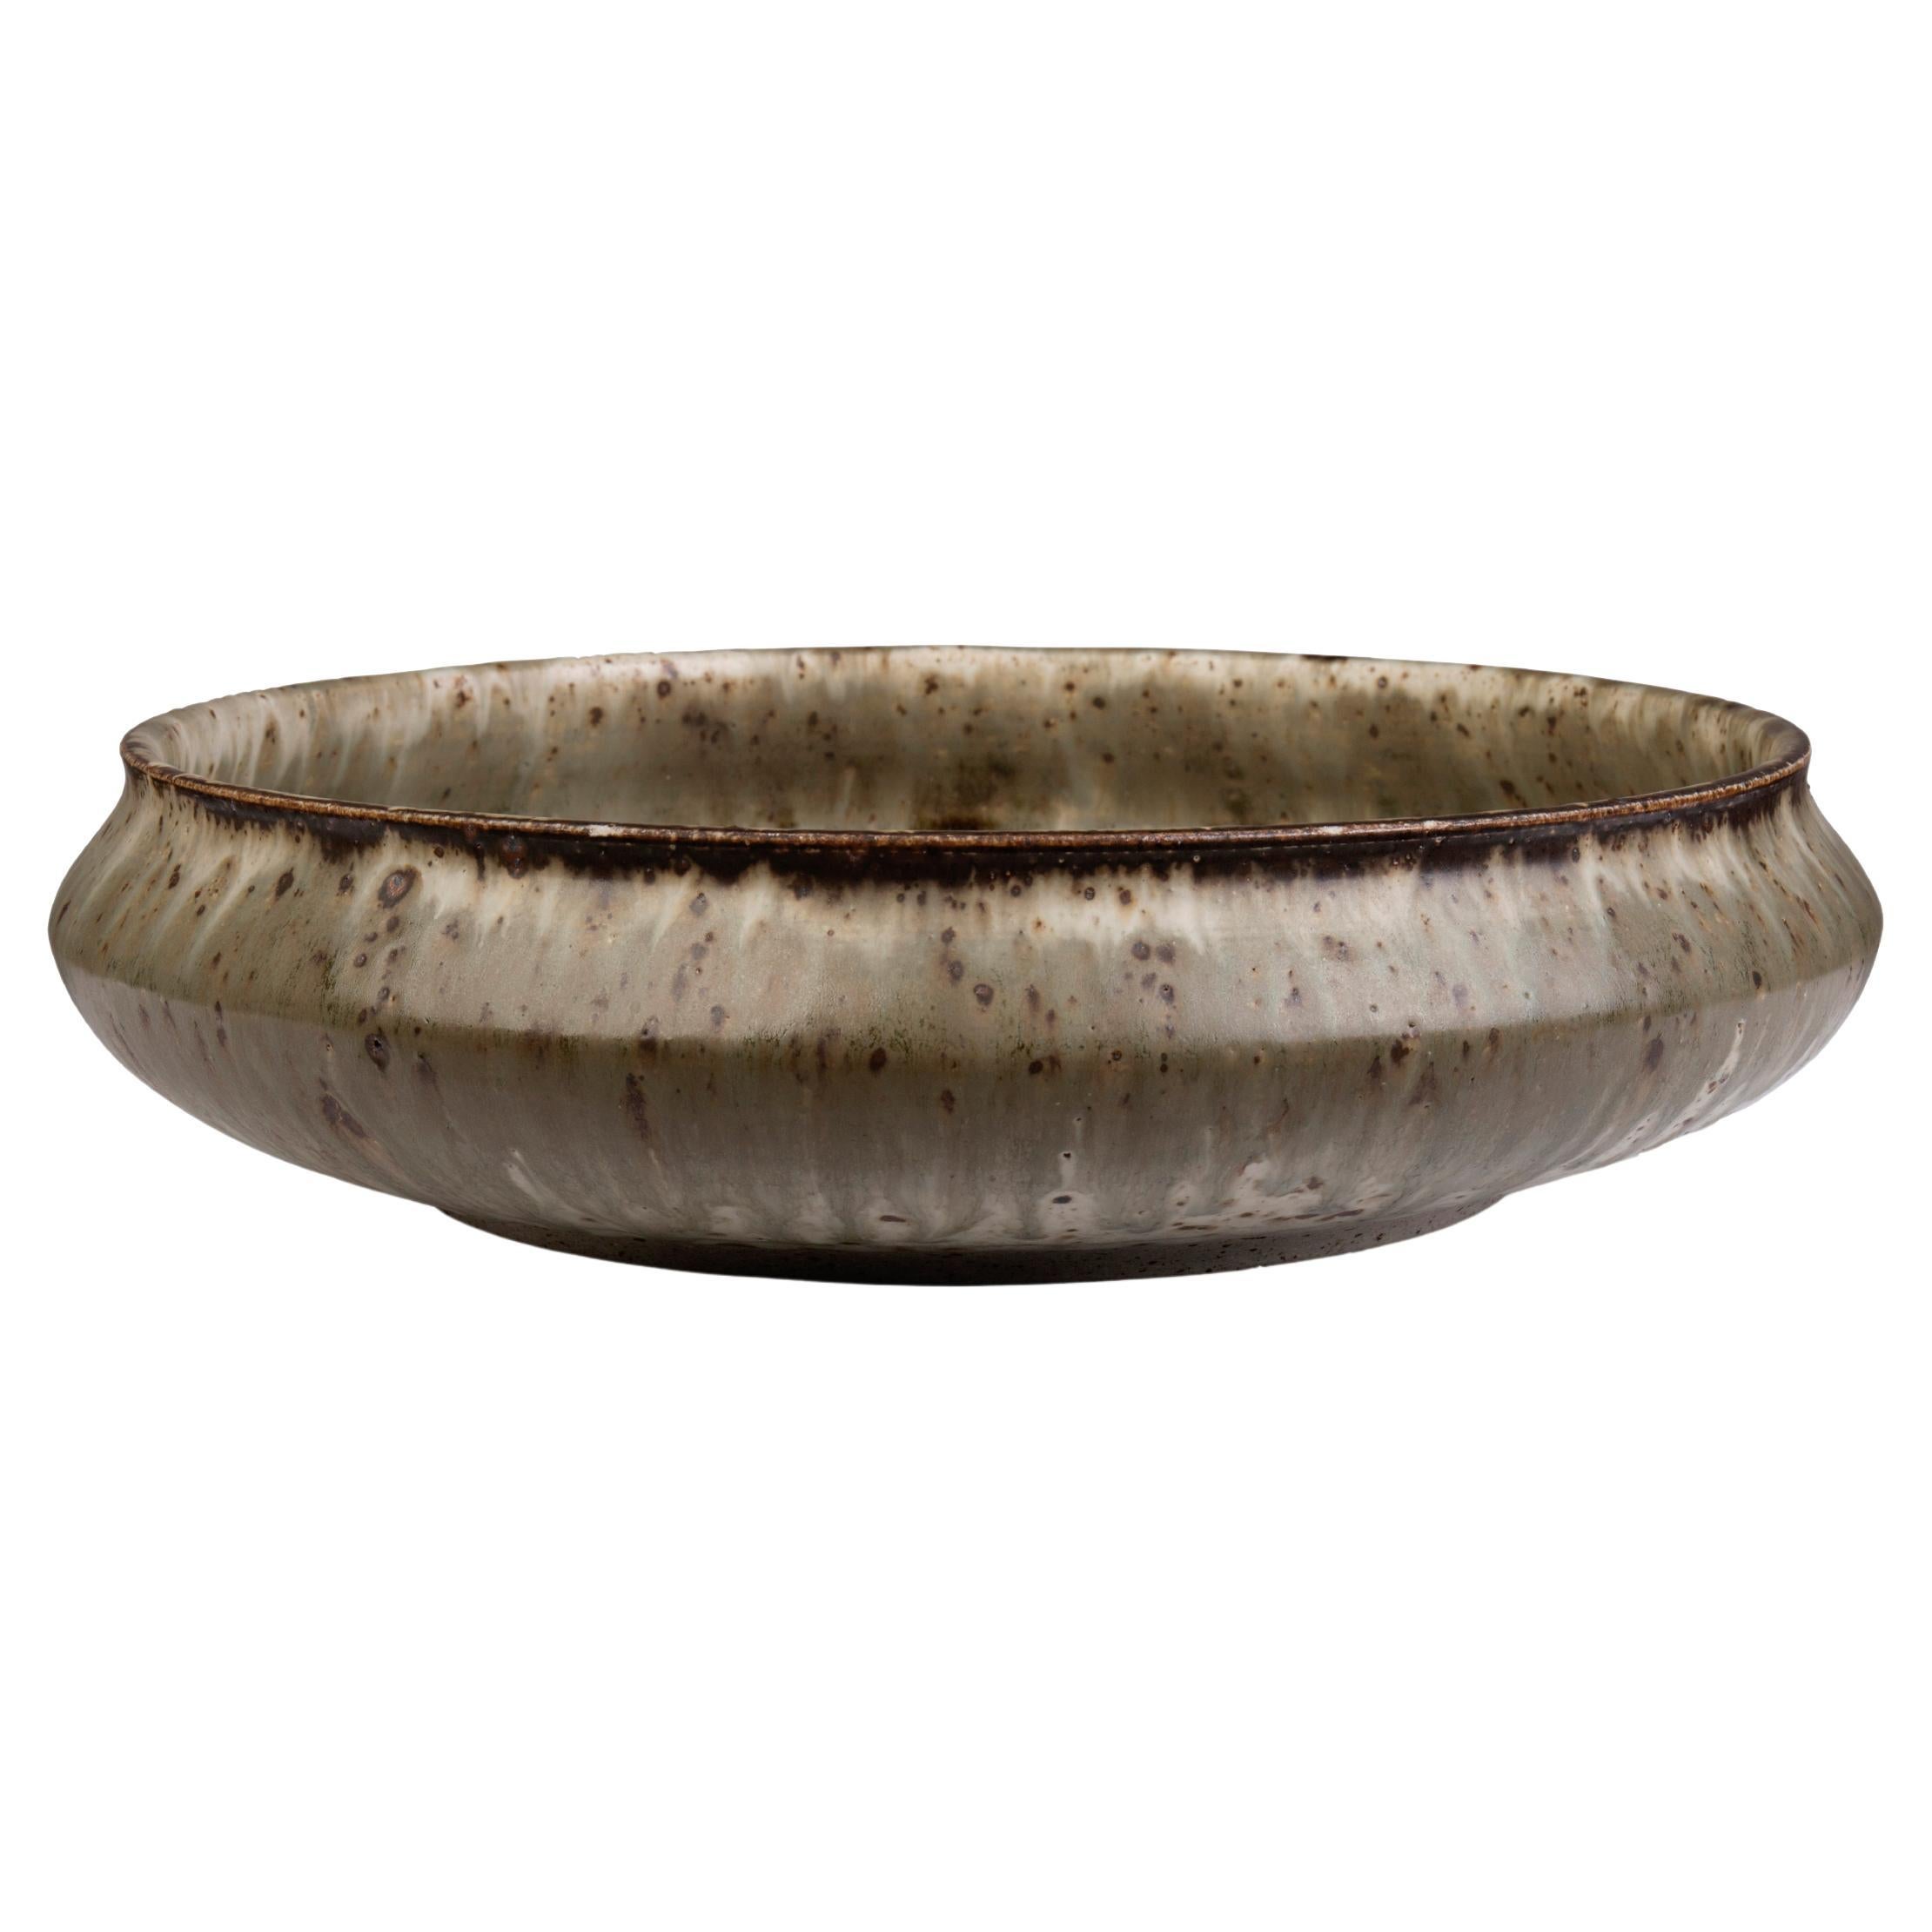 Partially glazed stoneware dish by Danish ceramist For Sale